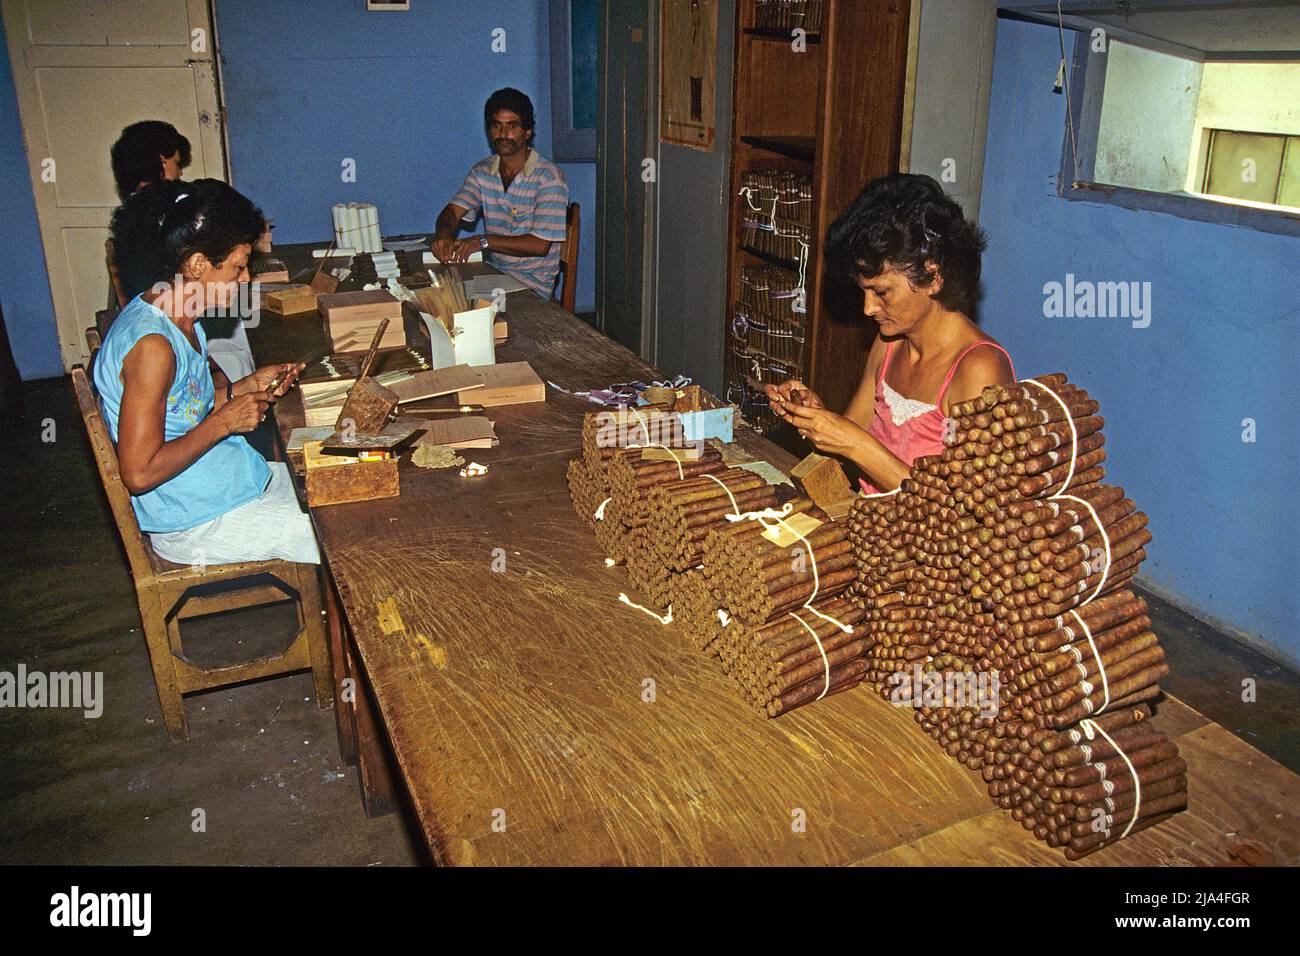 Kubanische Frauen und Maenner drehen echte kubanische Havanna-Zigarren in einer Zigarrenfabrik in Pinar del Rio, Kuba, Karibik | Cuban man and women r Stock Photo